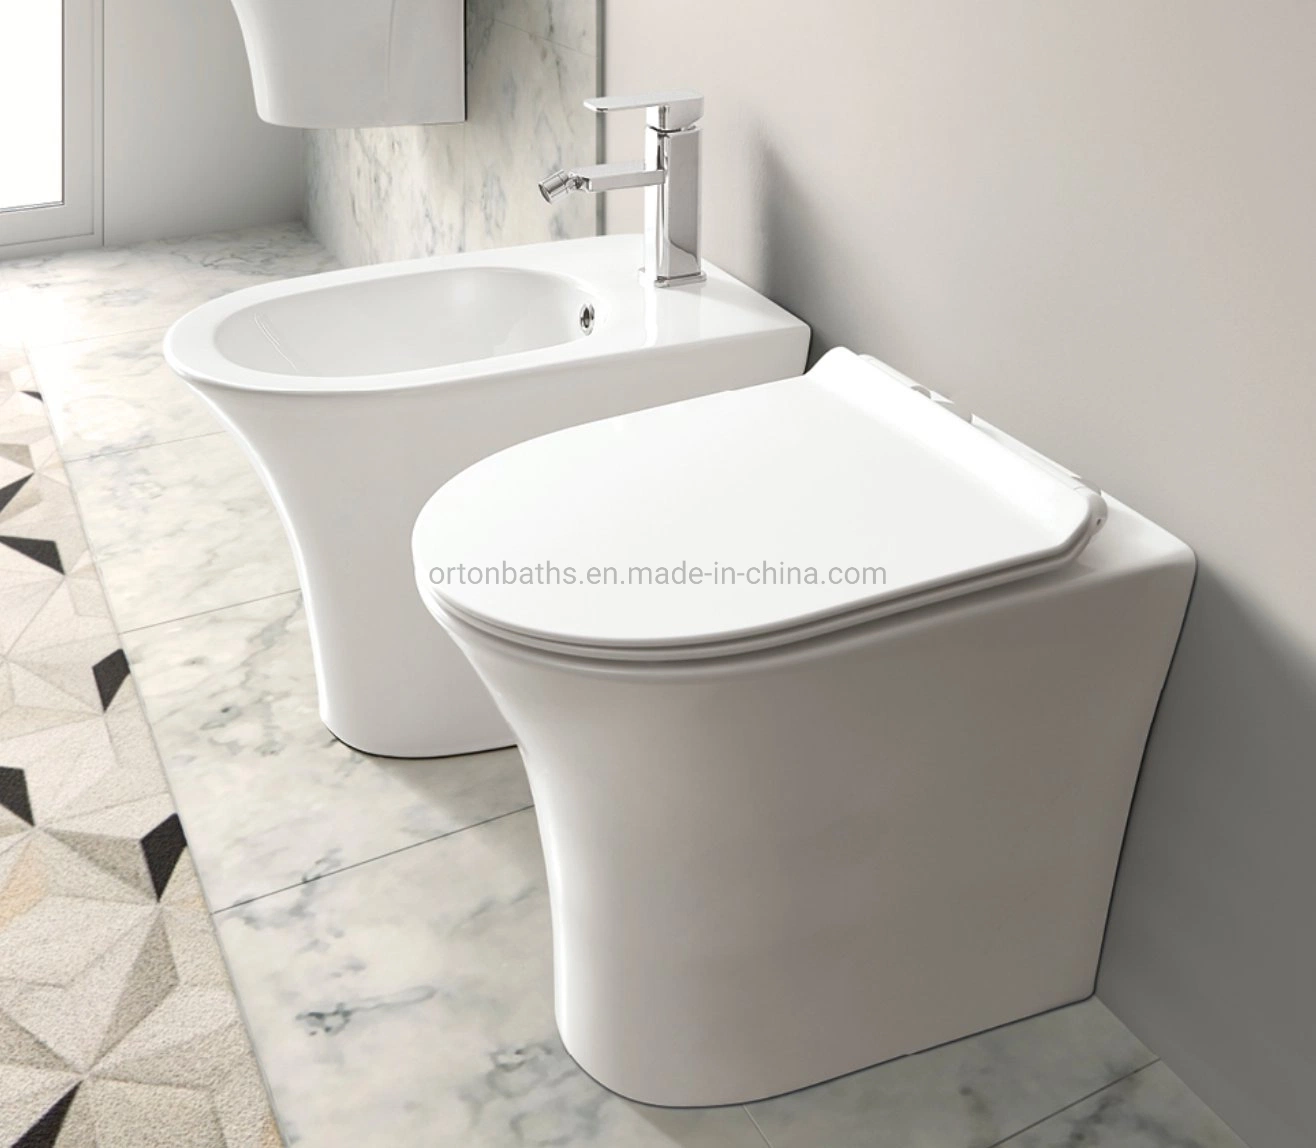 Ortonbath Toilet Europe Smart Bathroom Toilet Sanitary Ware Africa Twyford Ceramic Floor Mounted One Two Piece Wc Rimless Bidet Toilet with Bowl Seat Cover